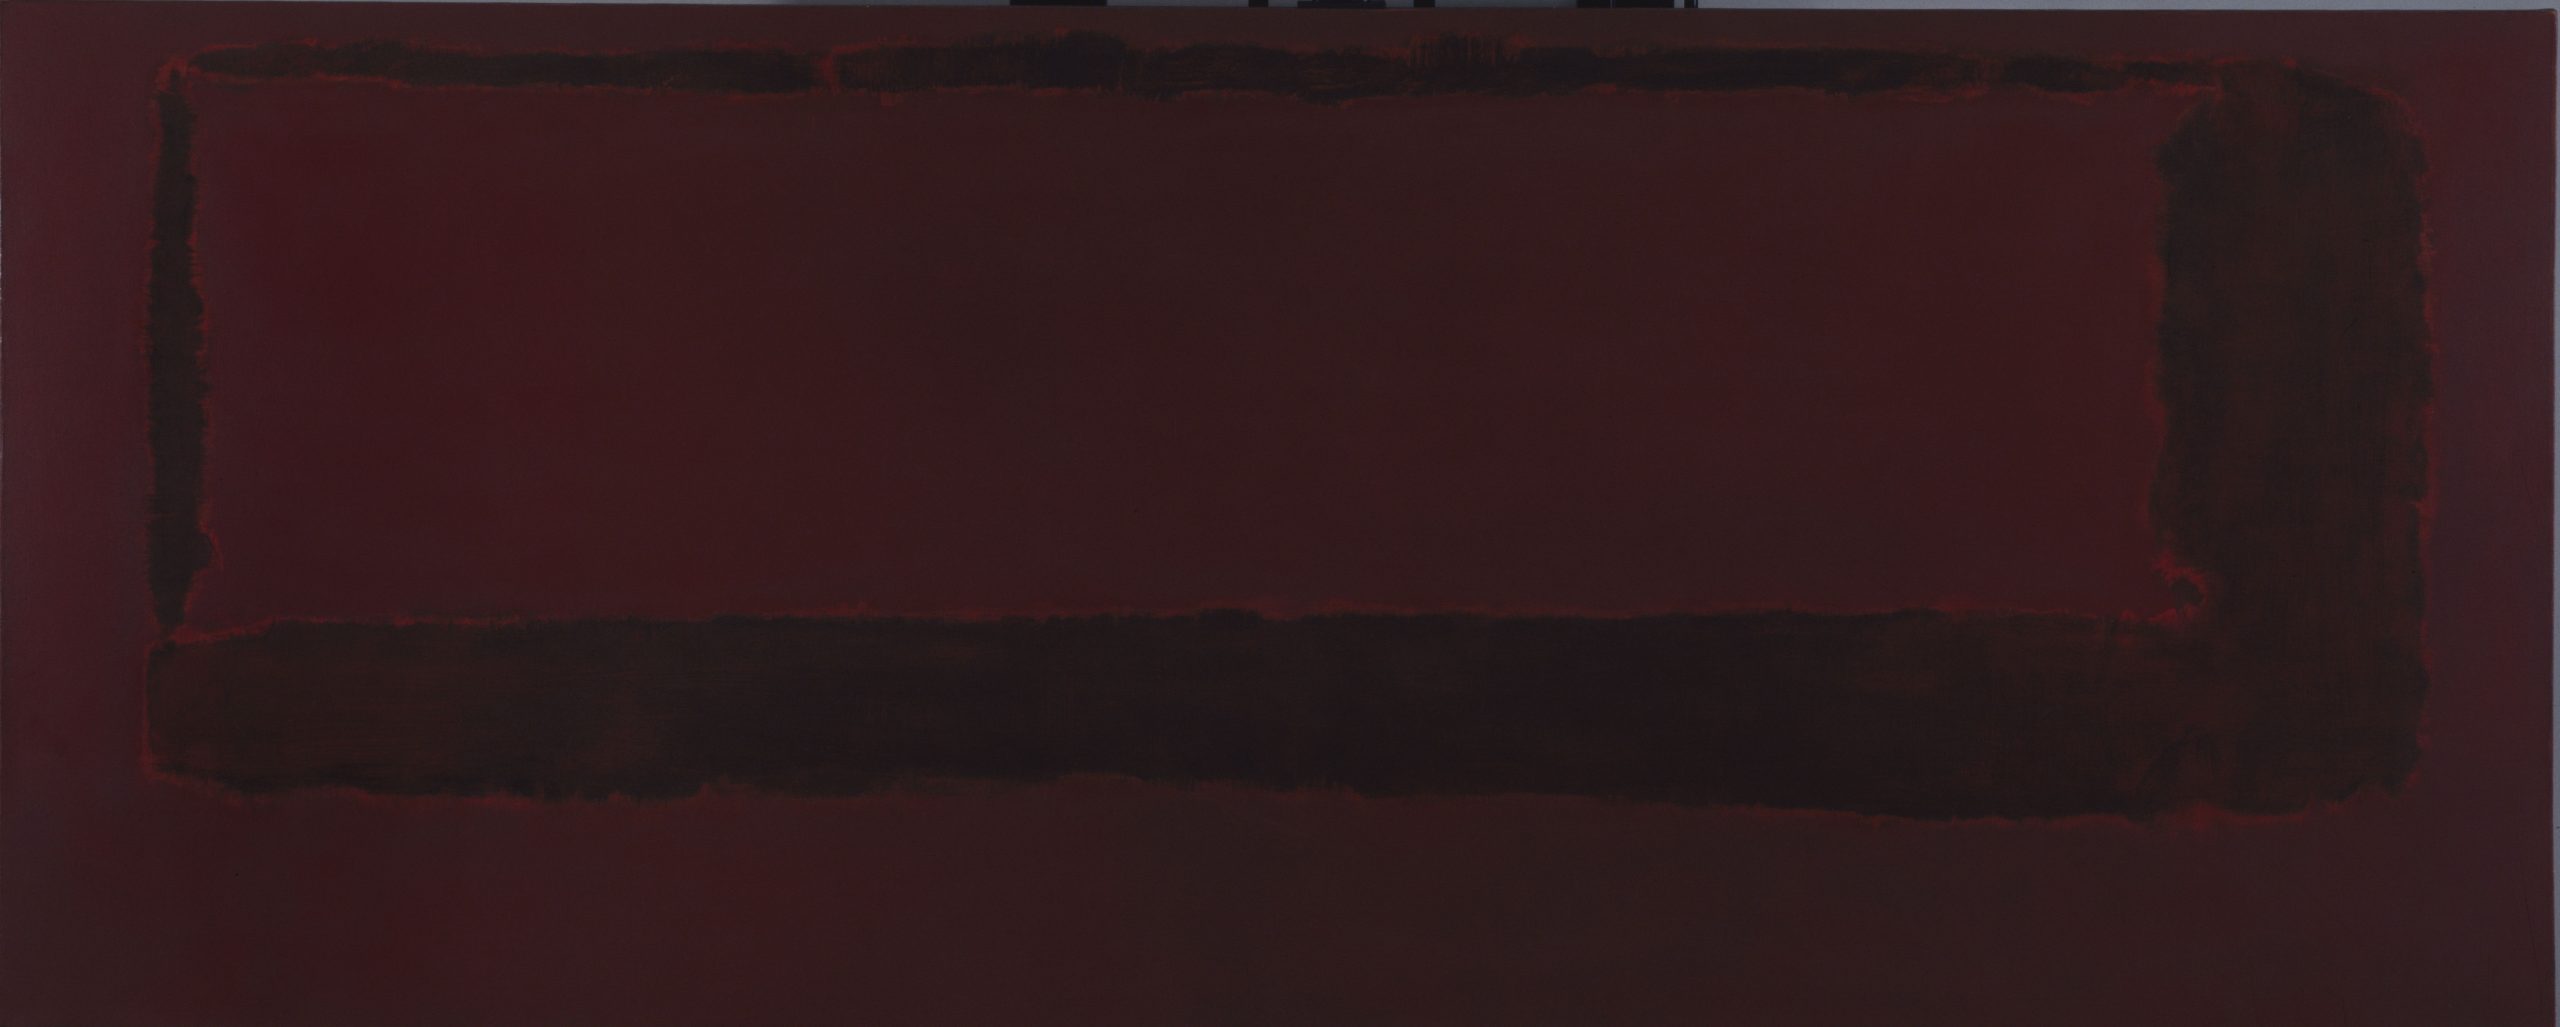 Mark Rothko Red on Maroon 1958. Tate Â© Kate Rothko Prizel and Christopher Rothko/DACS 2020